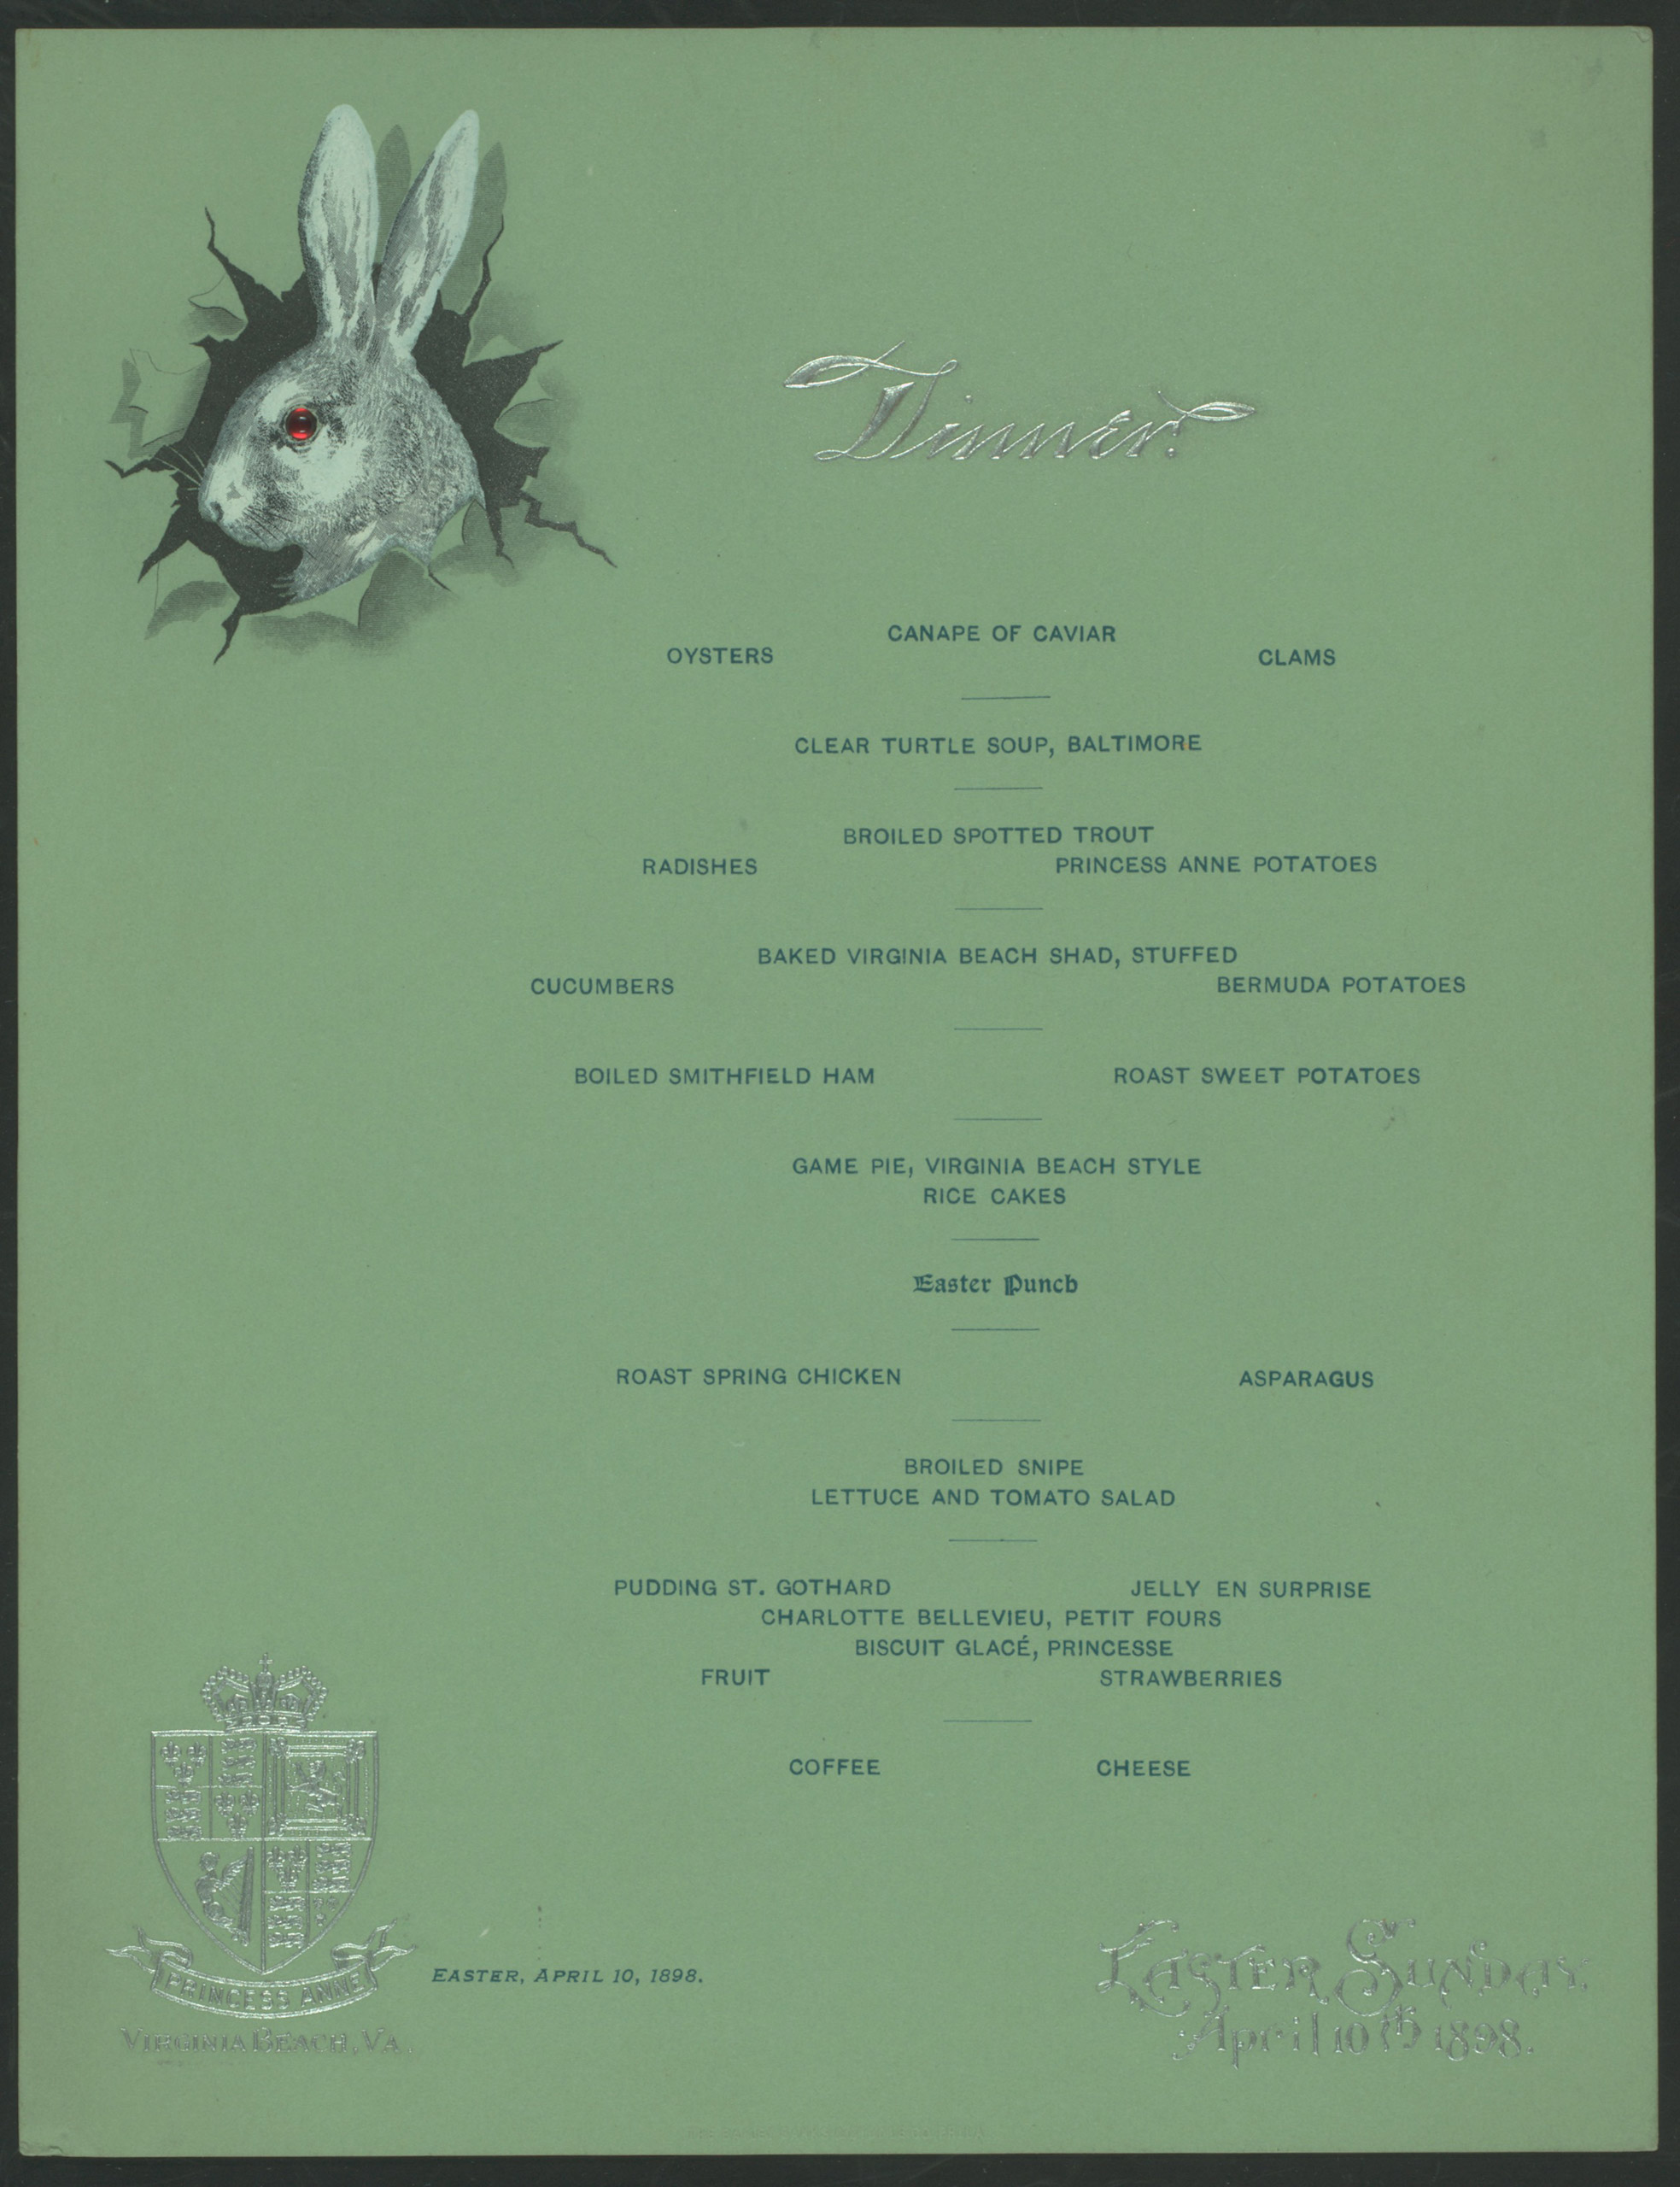 Easter Sunday dinner at the Princess Anne Hotel in Virginia Beach, VA. 1898.